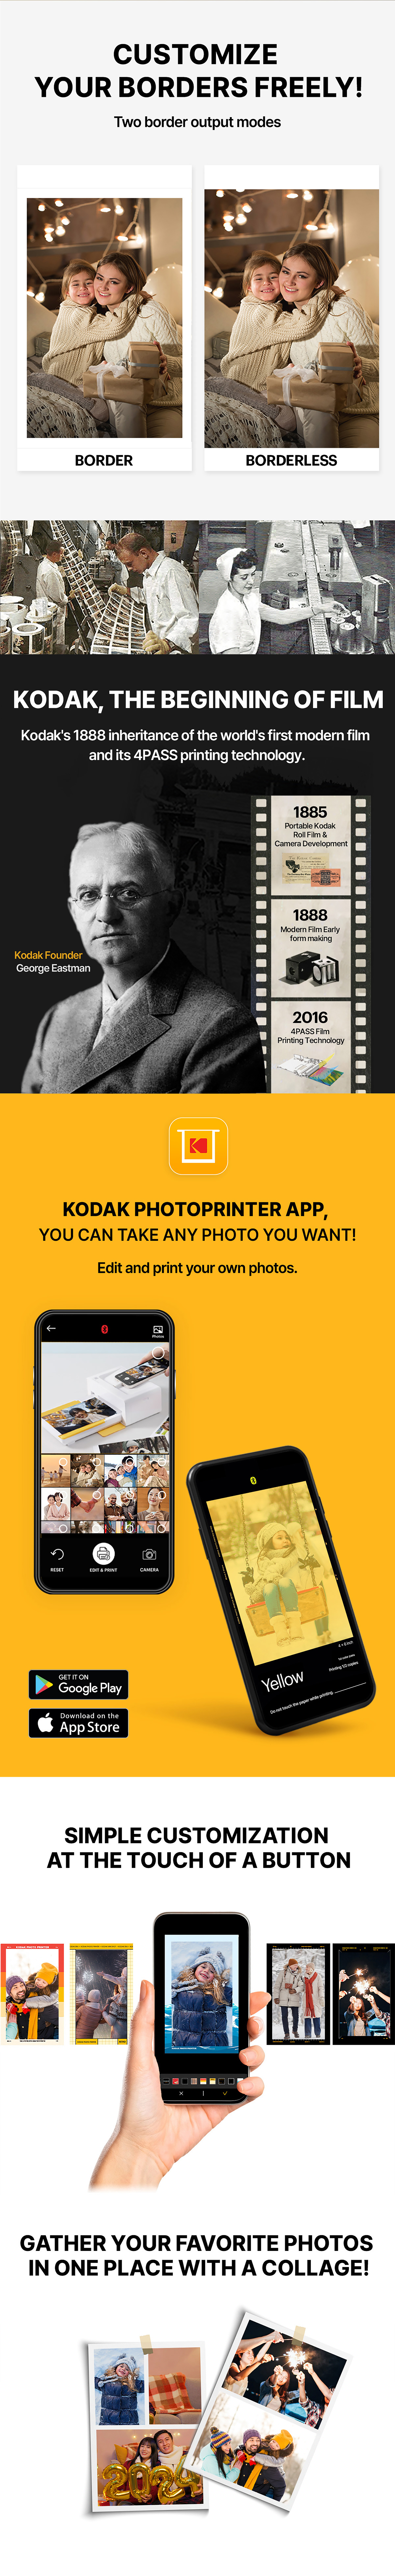 KODAK PD460 - Imprimante Photo 10x15 cm - Bluetooth & Docking